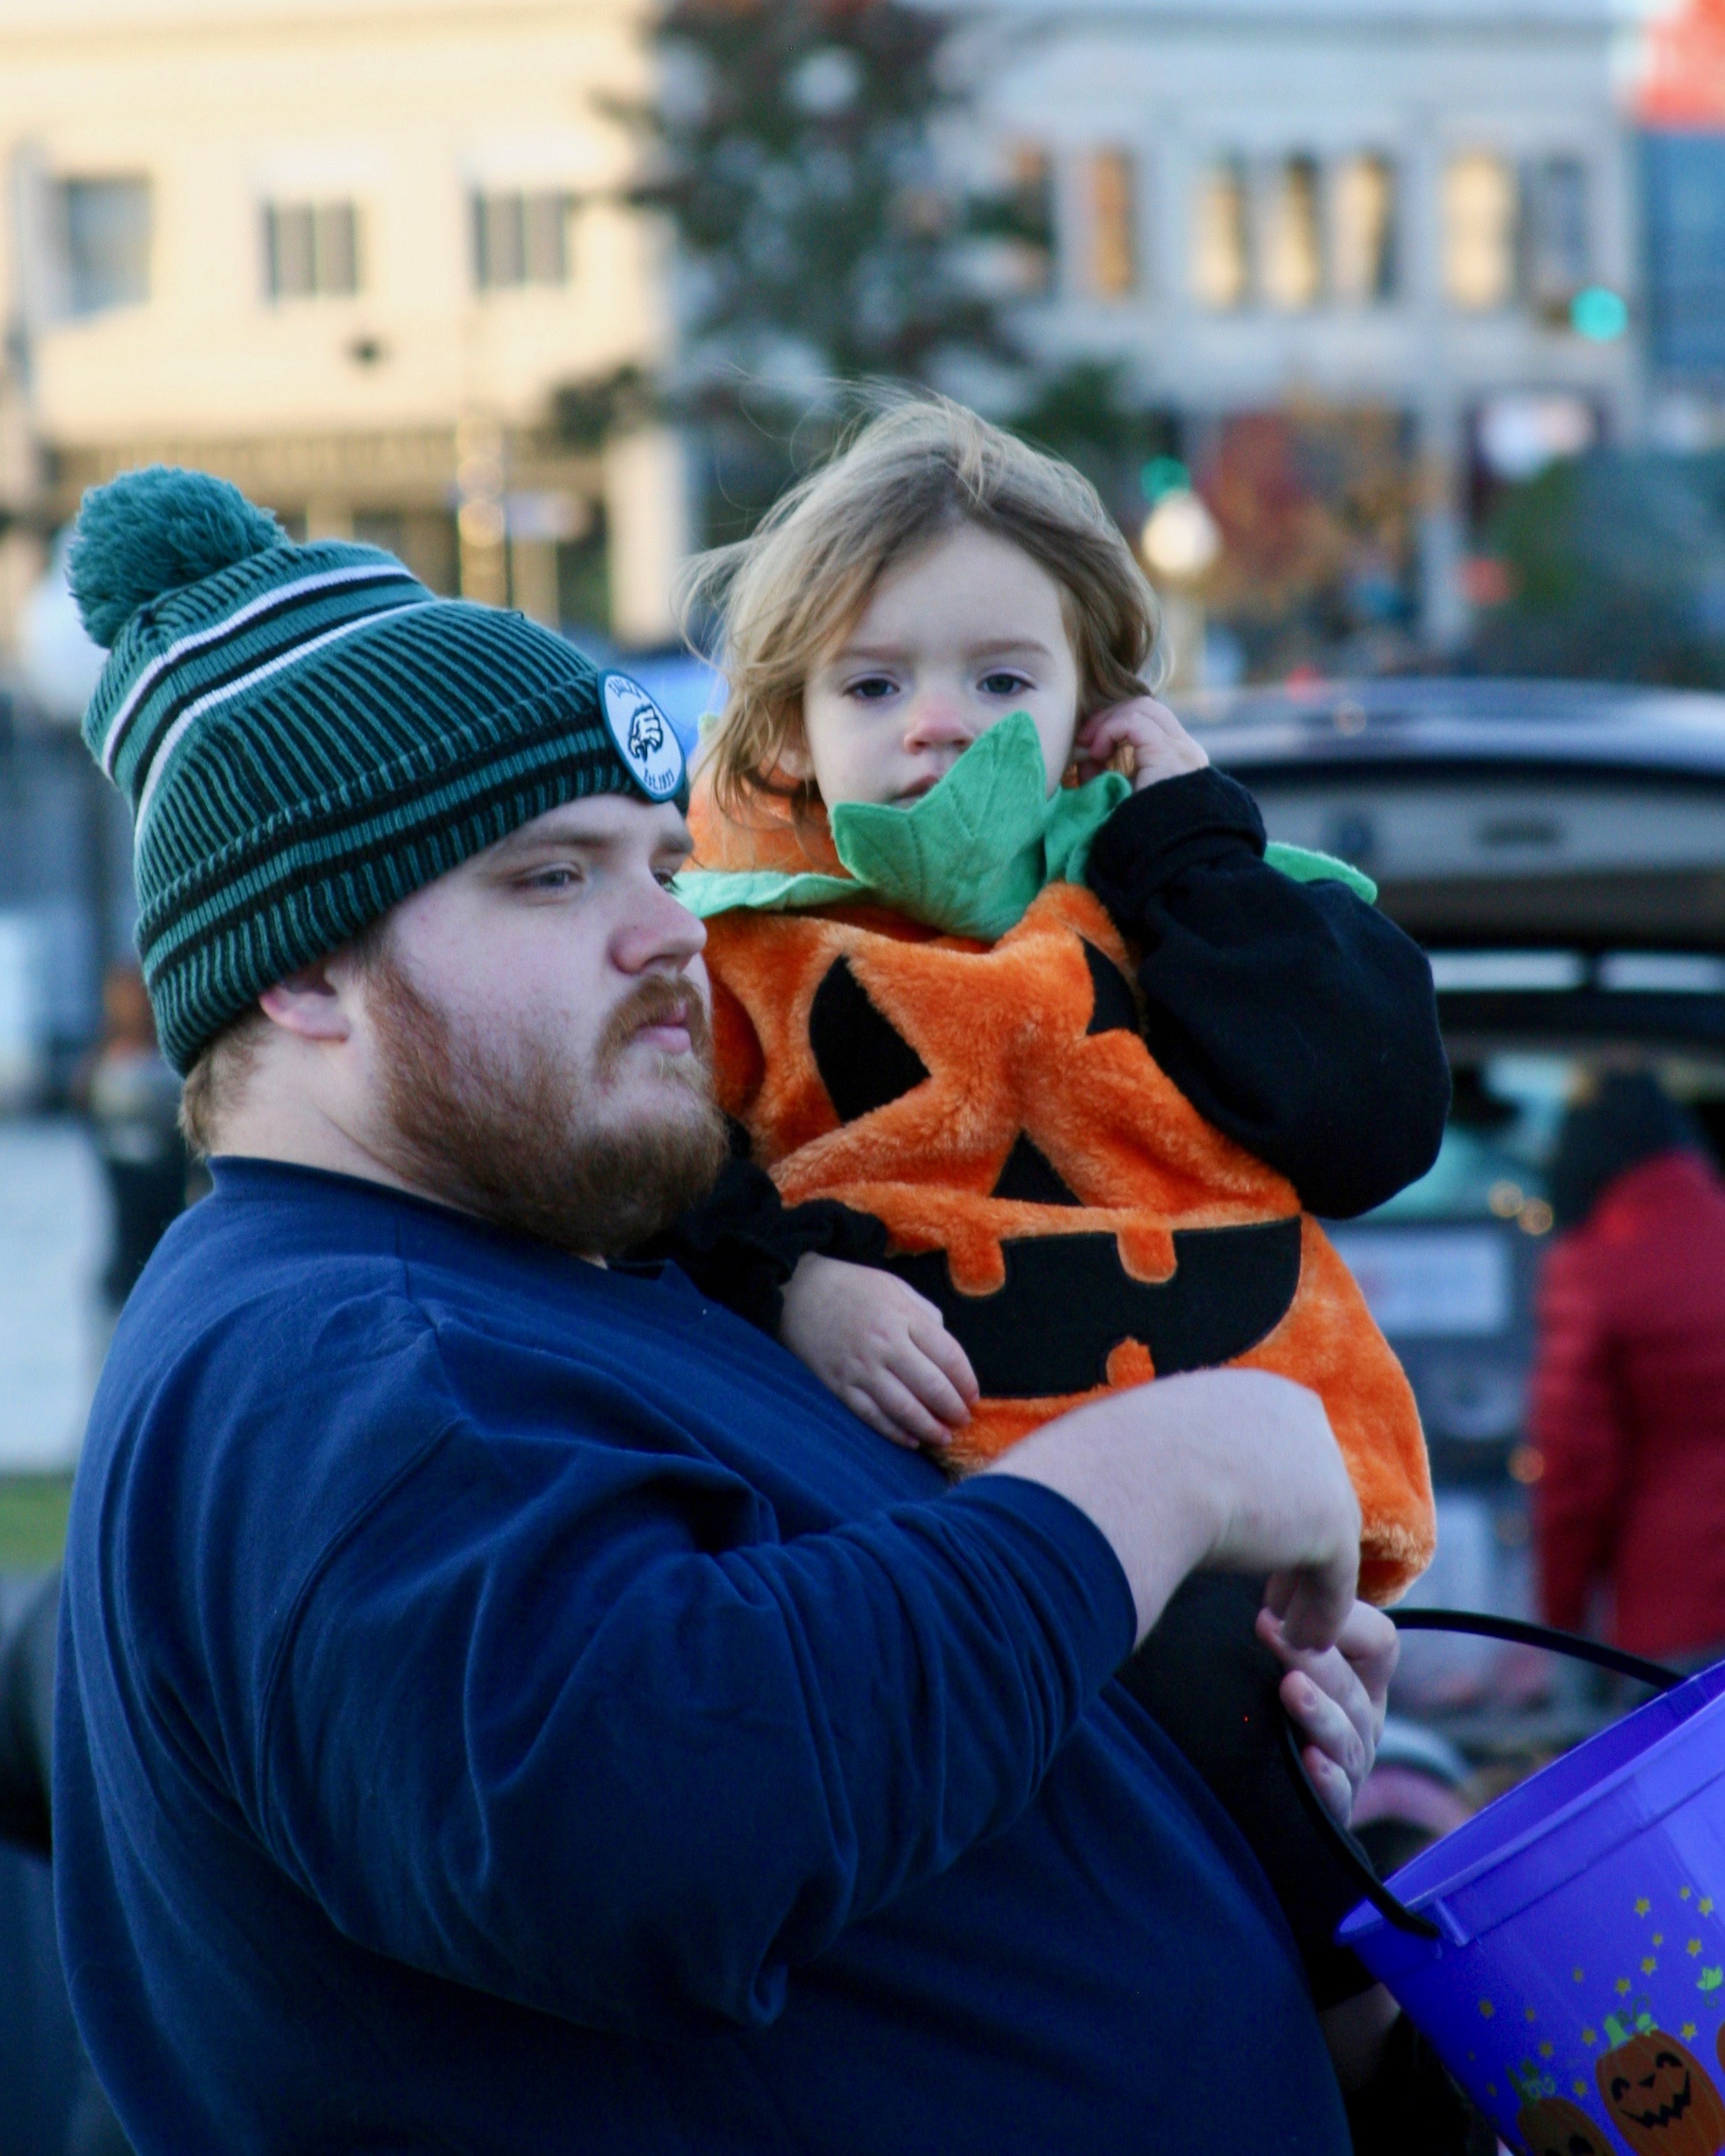 Man holding child dressed as a pumpkin